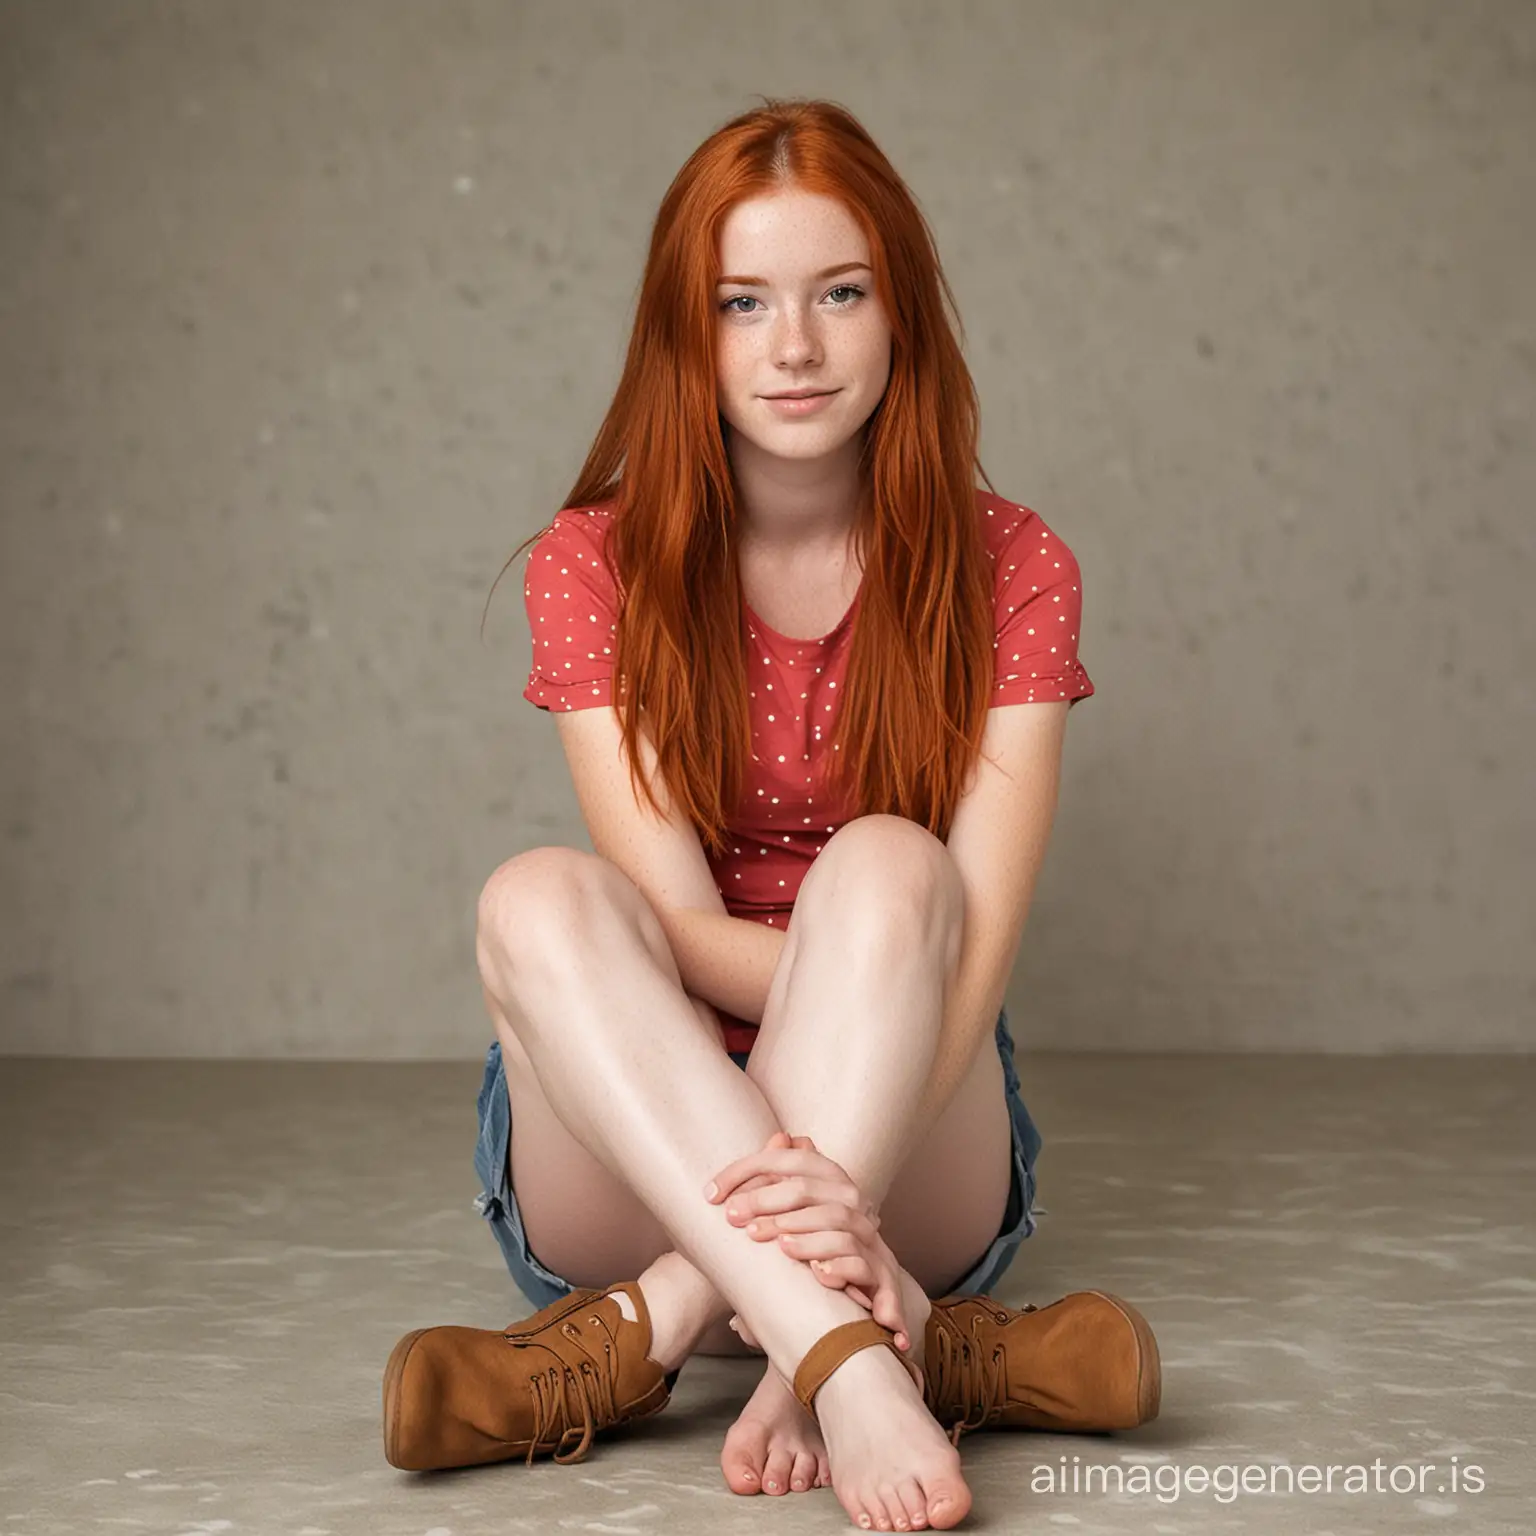 Redhead-Teen-with-Freckles-Sitting-CrossLegged